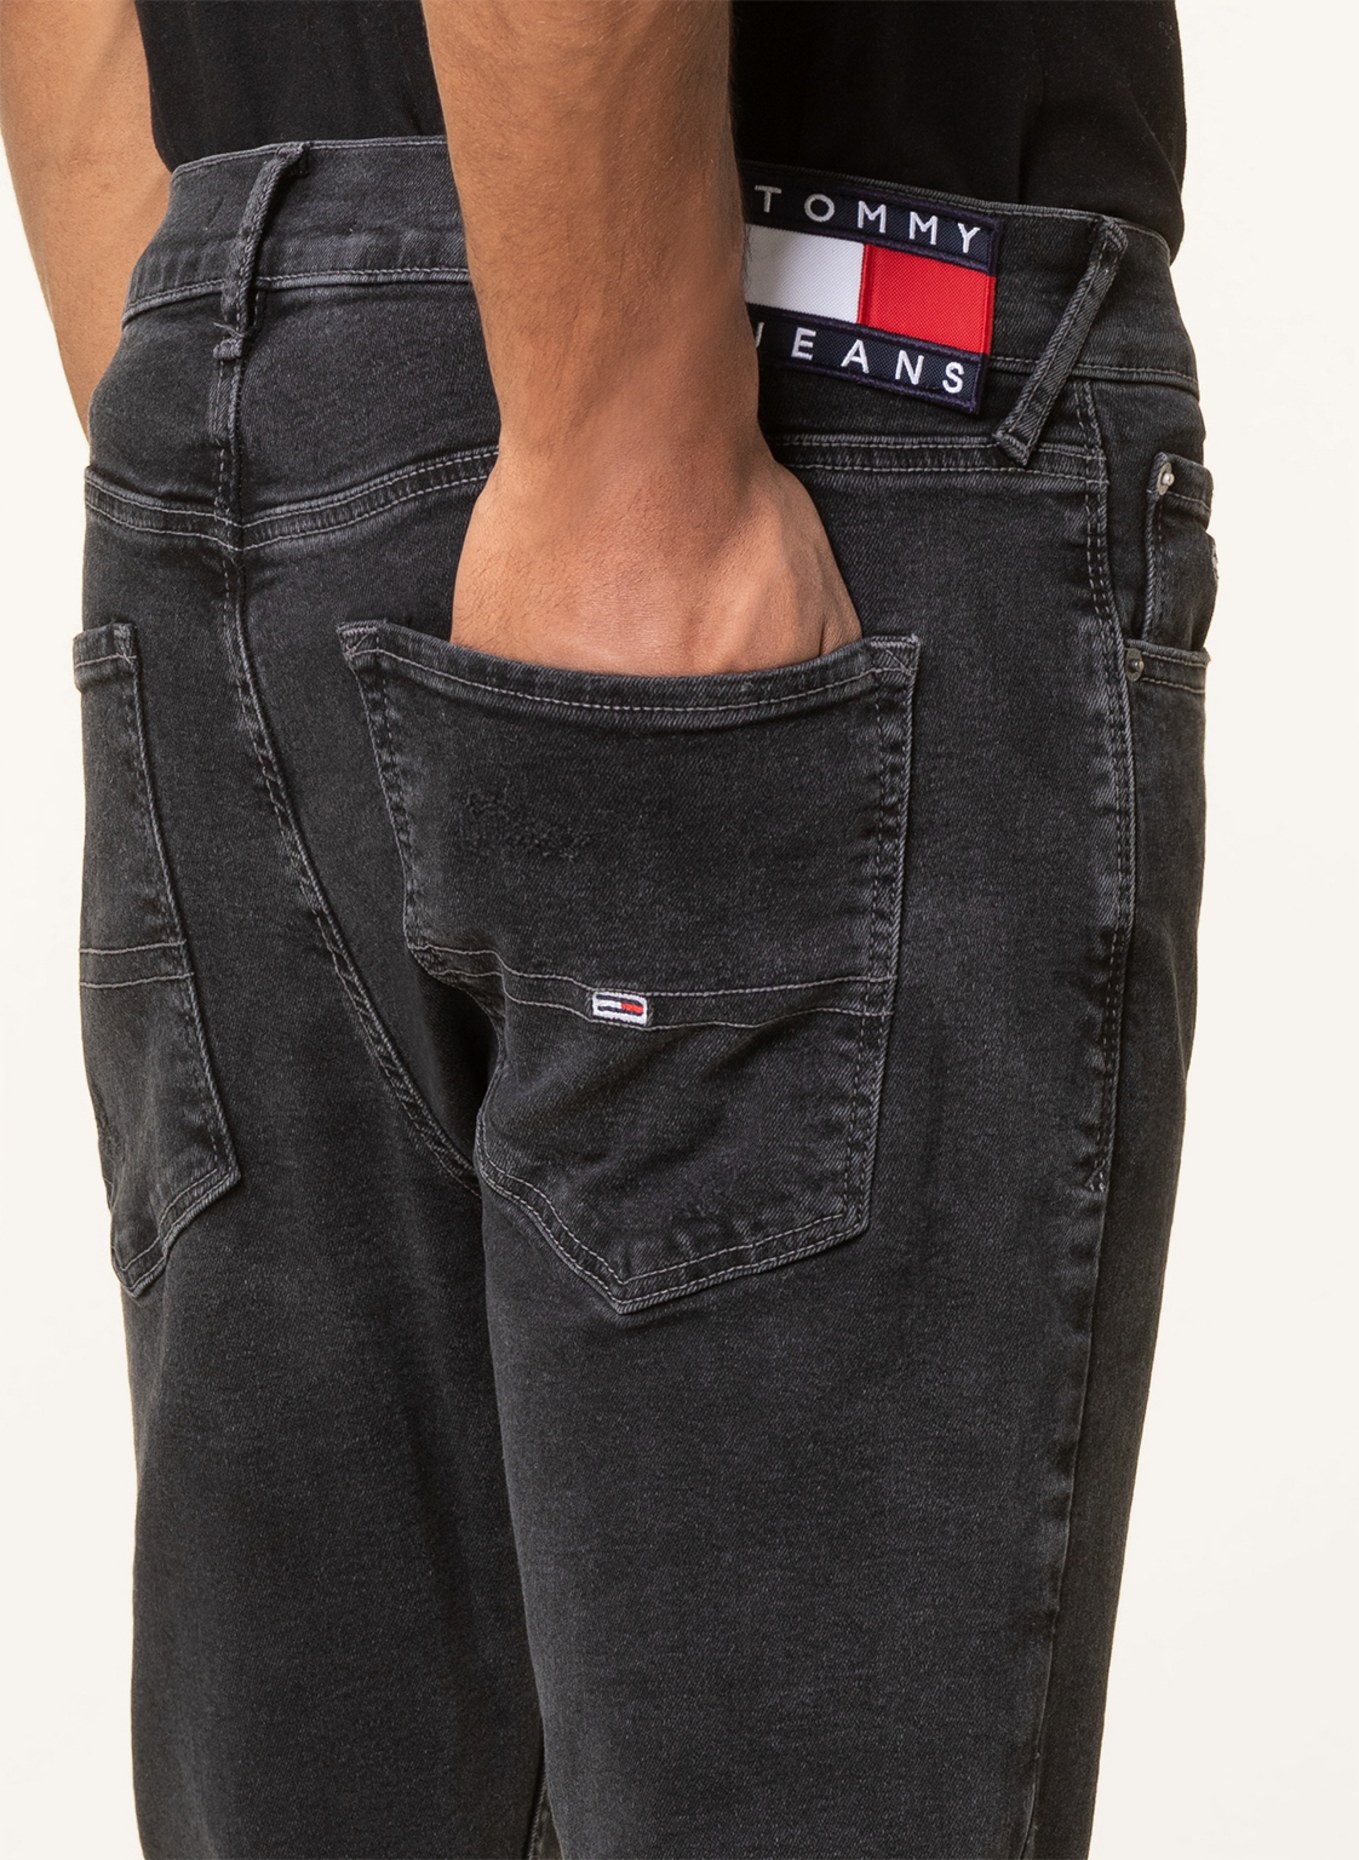 TOMMY JEANS Jeans SCANTON Slim Fit , Farbe: 1BZ Denim Black (Bild 5)